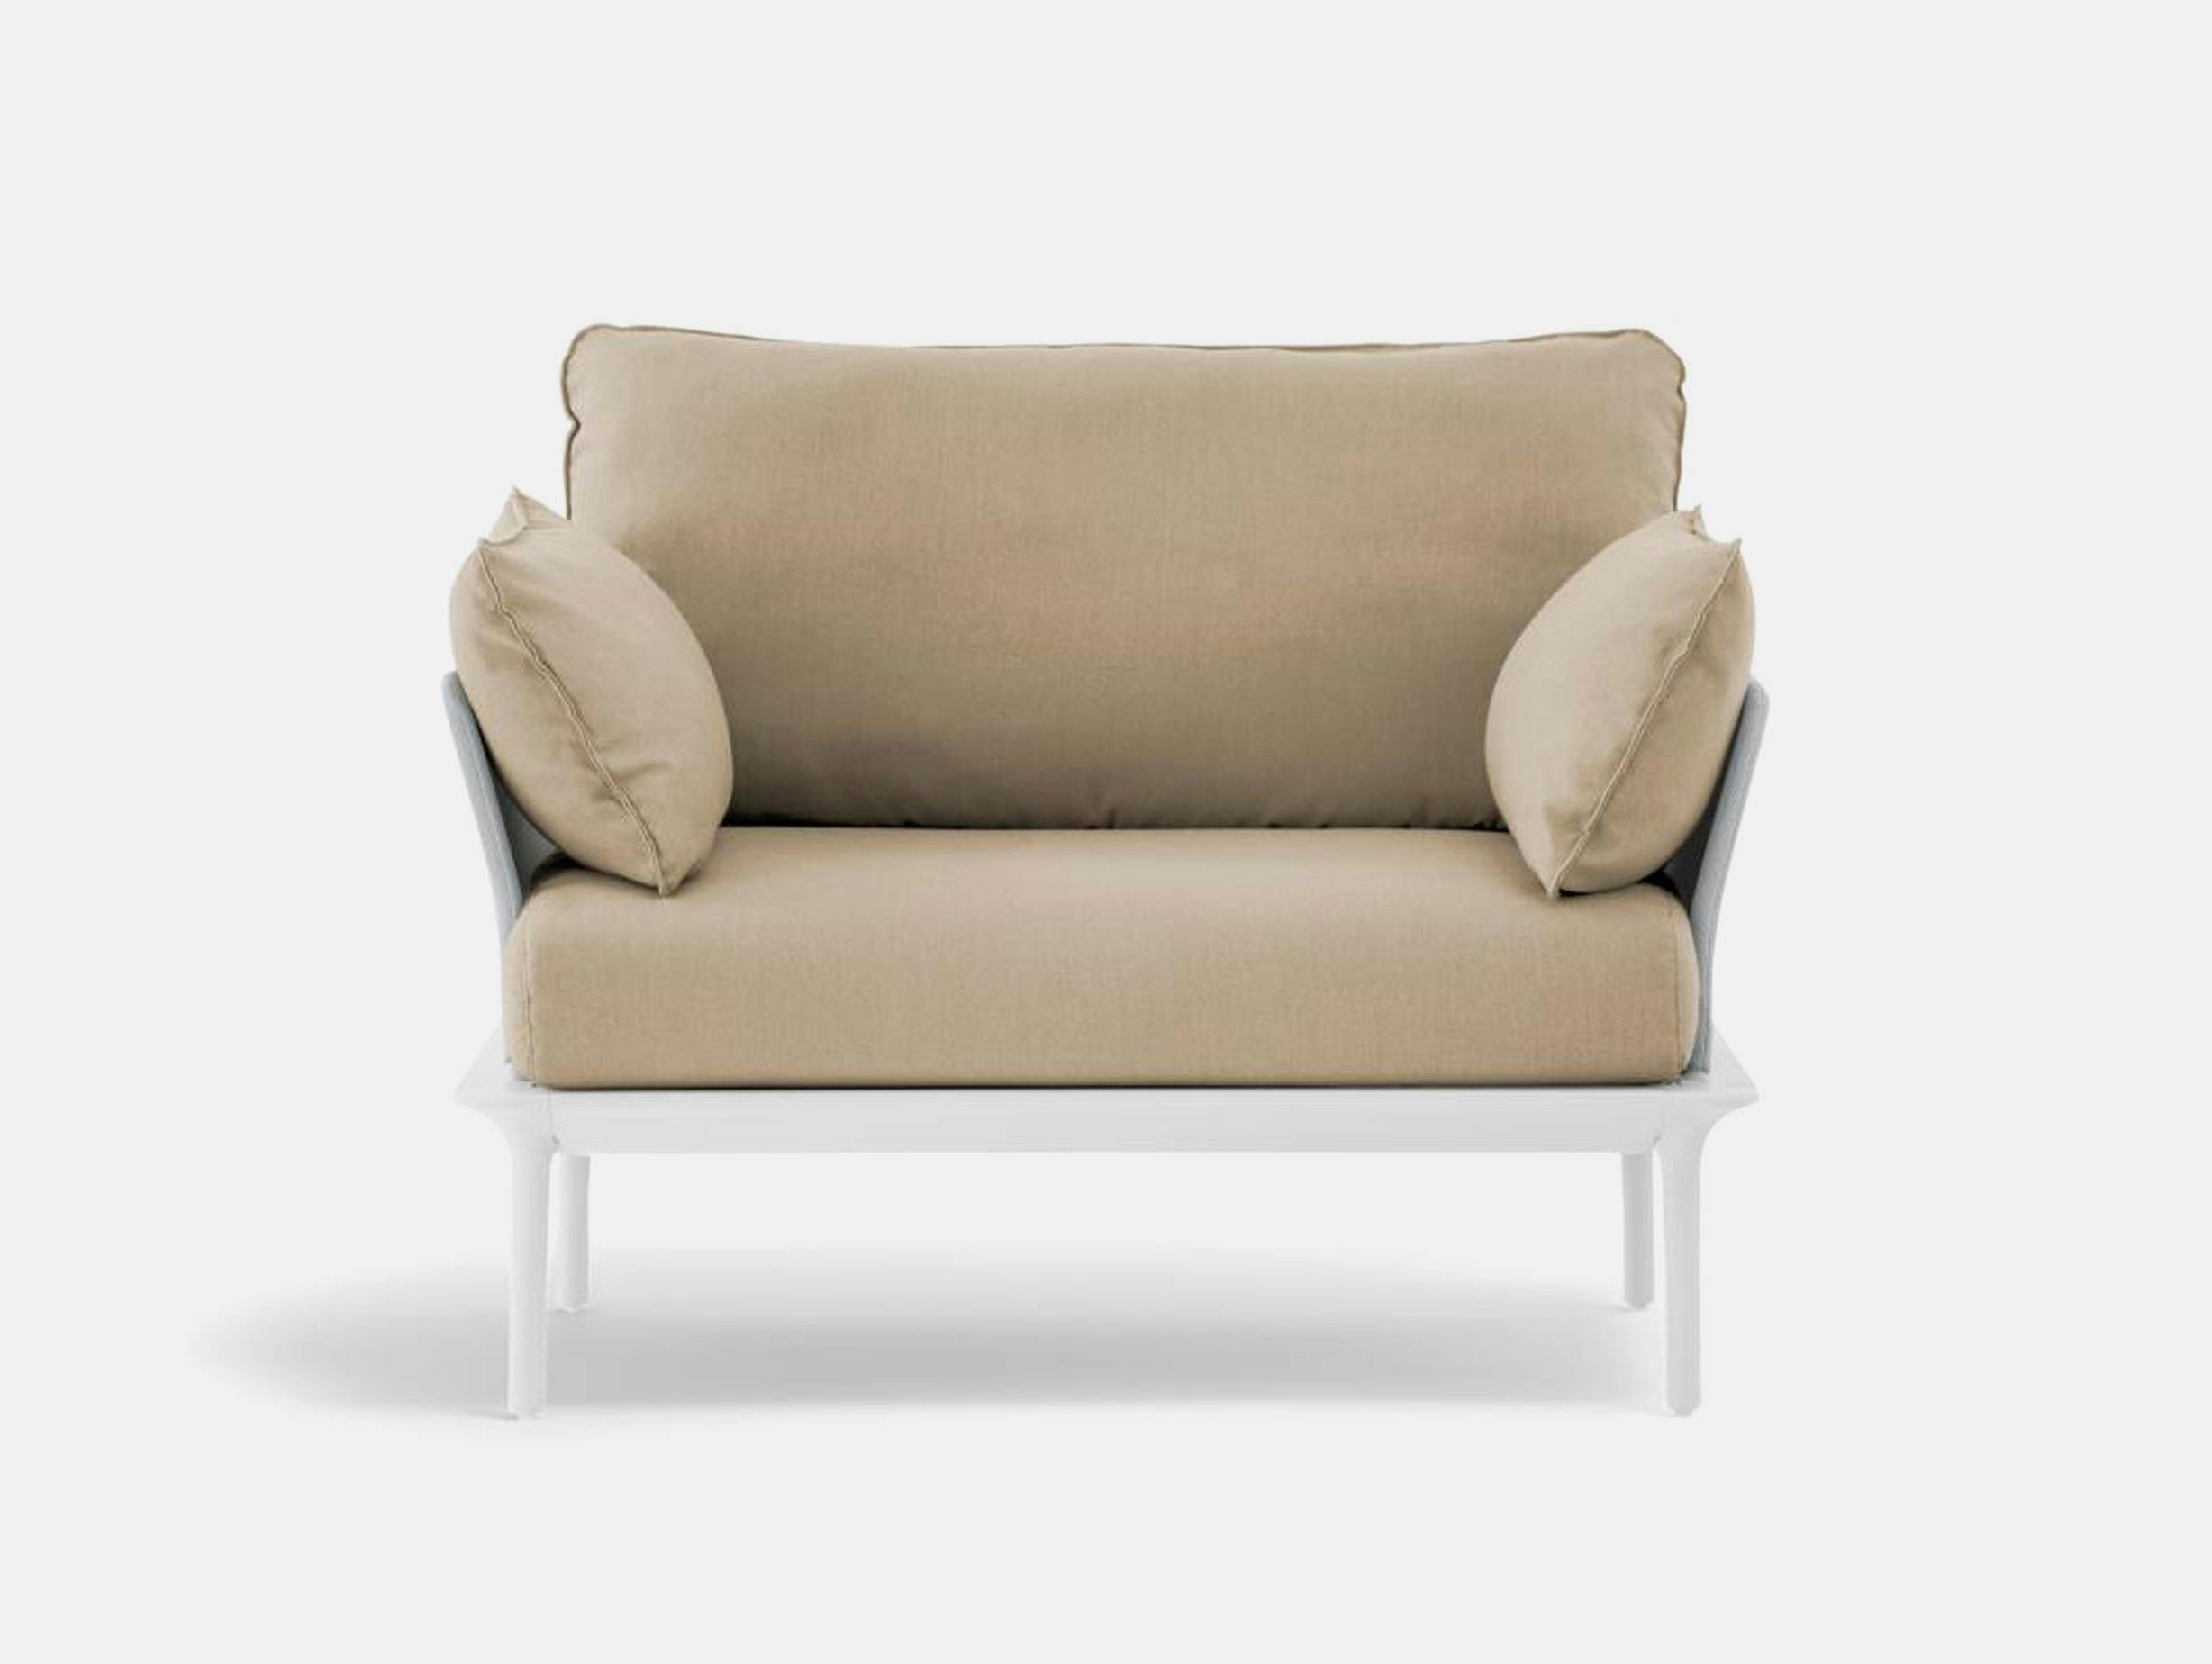 Pedrali patrick jouin reva outdoor lounge BI100E Frame, GC Textile Shell, D83 Upholstery